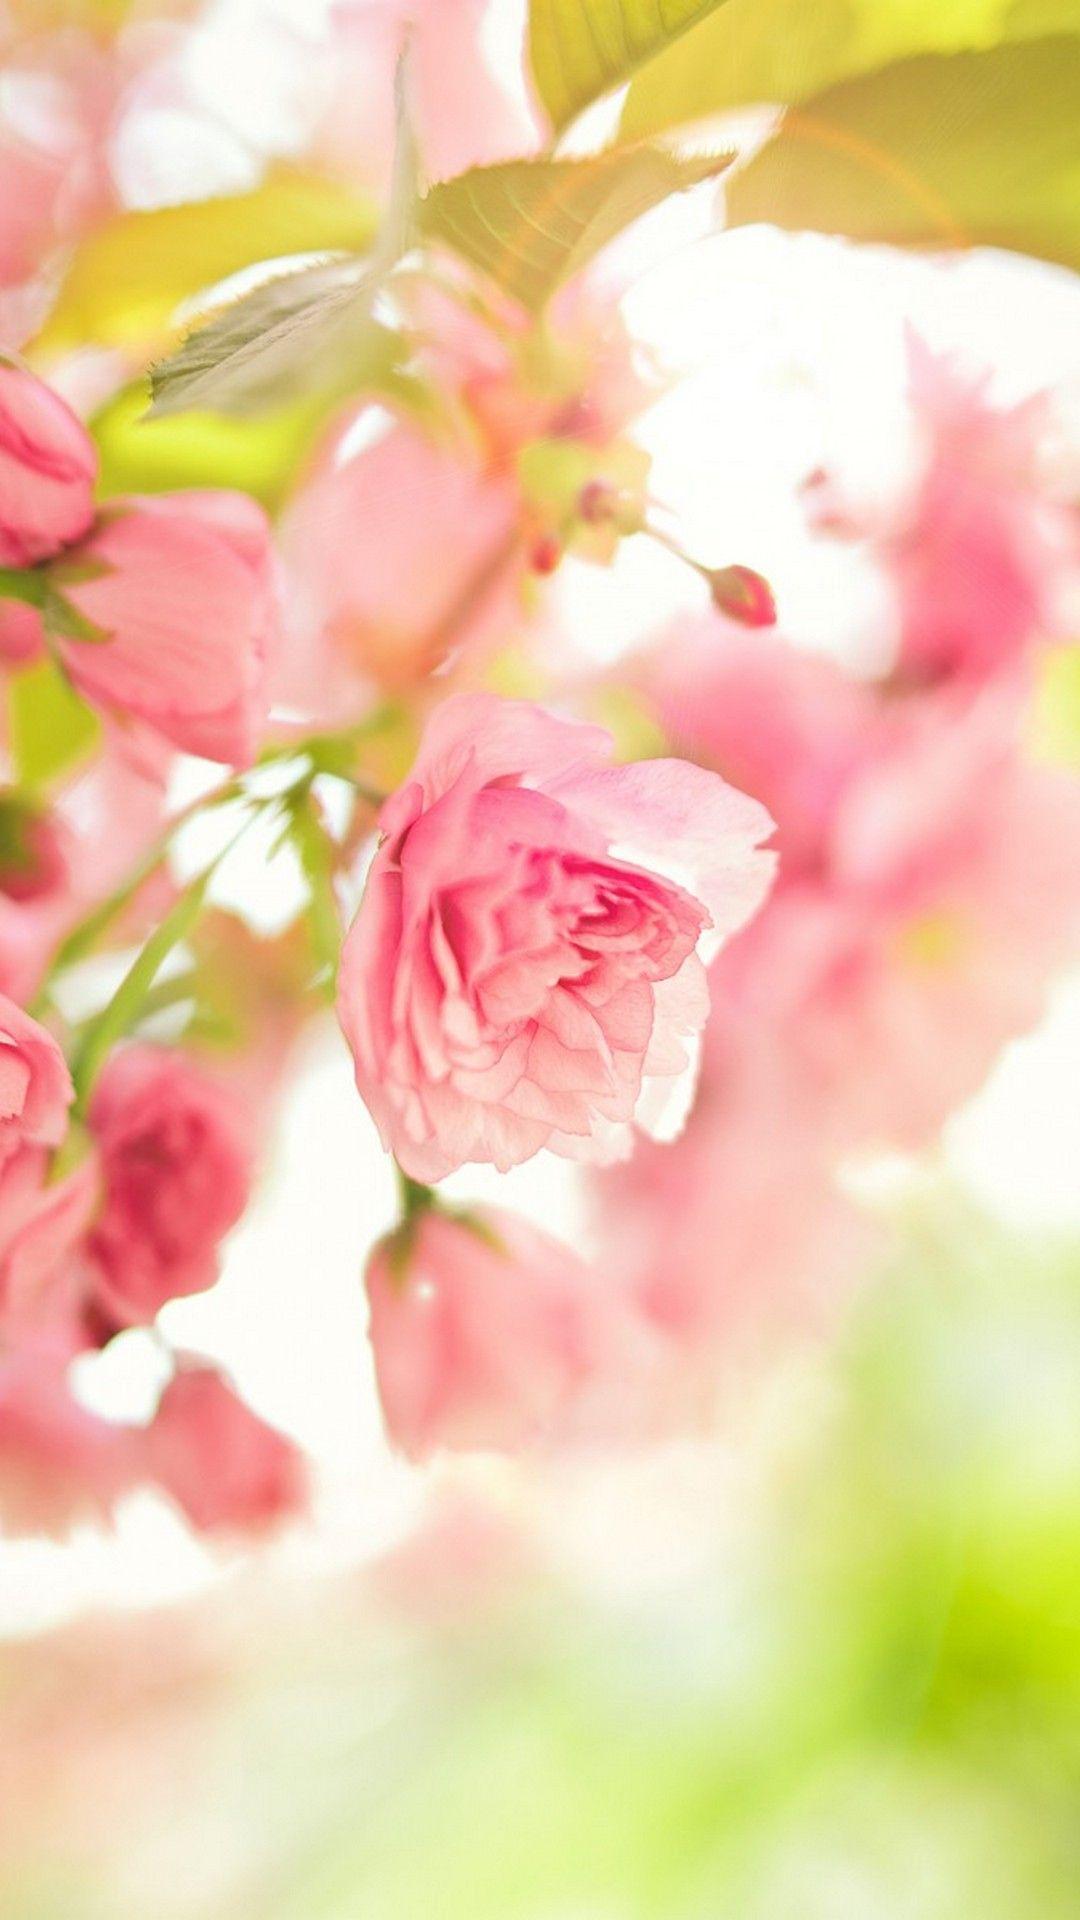 iPhone X Wallpaper Cute Spring. Cute flower wallpaper